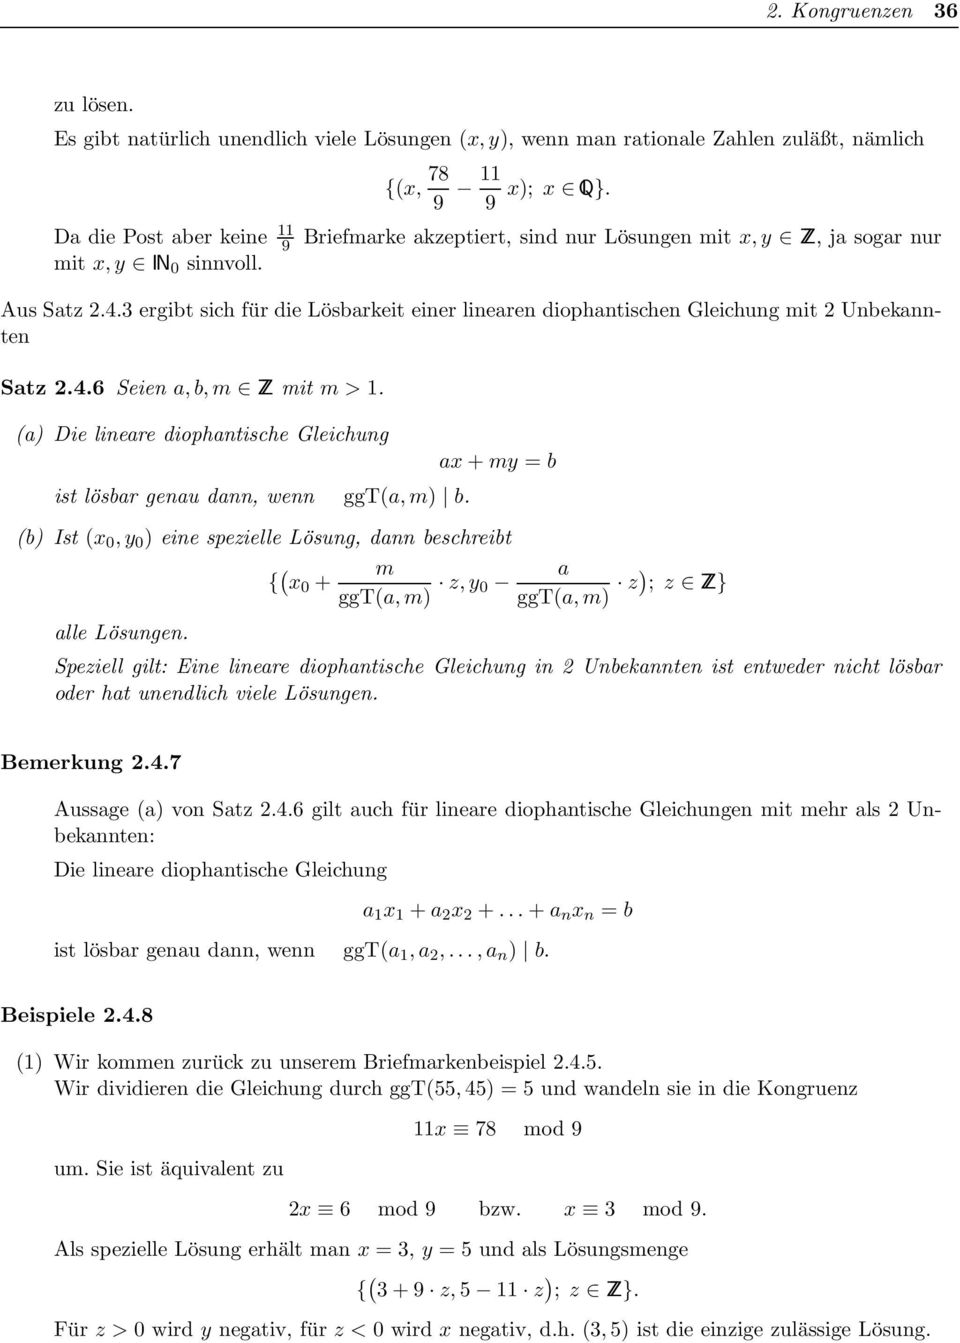 (a) Die lineare diophantische Gleichung ist lösbar genau dann, wenn ggt(a,m) b.